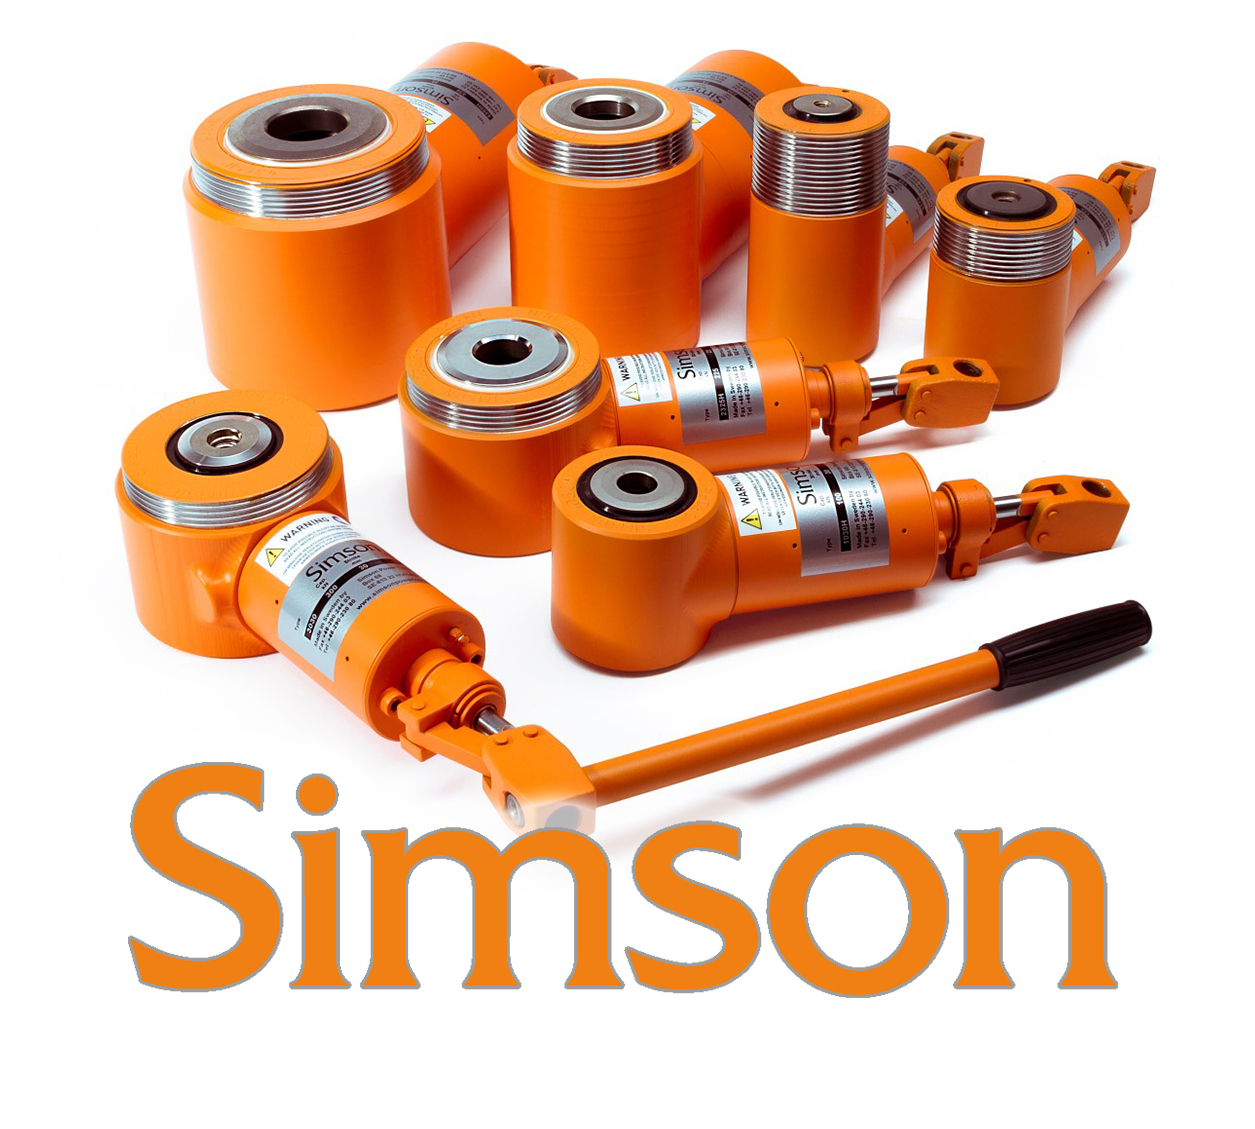 Simson Power Tools